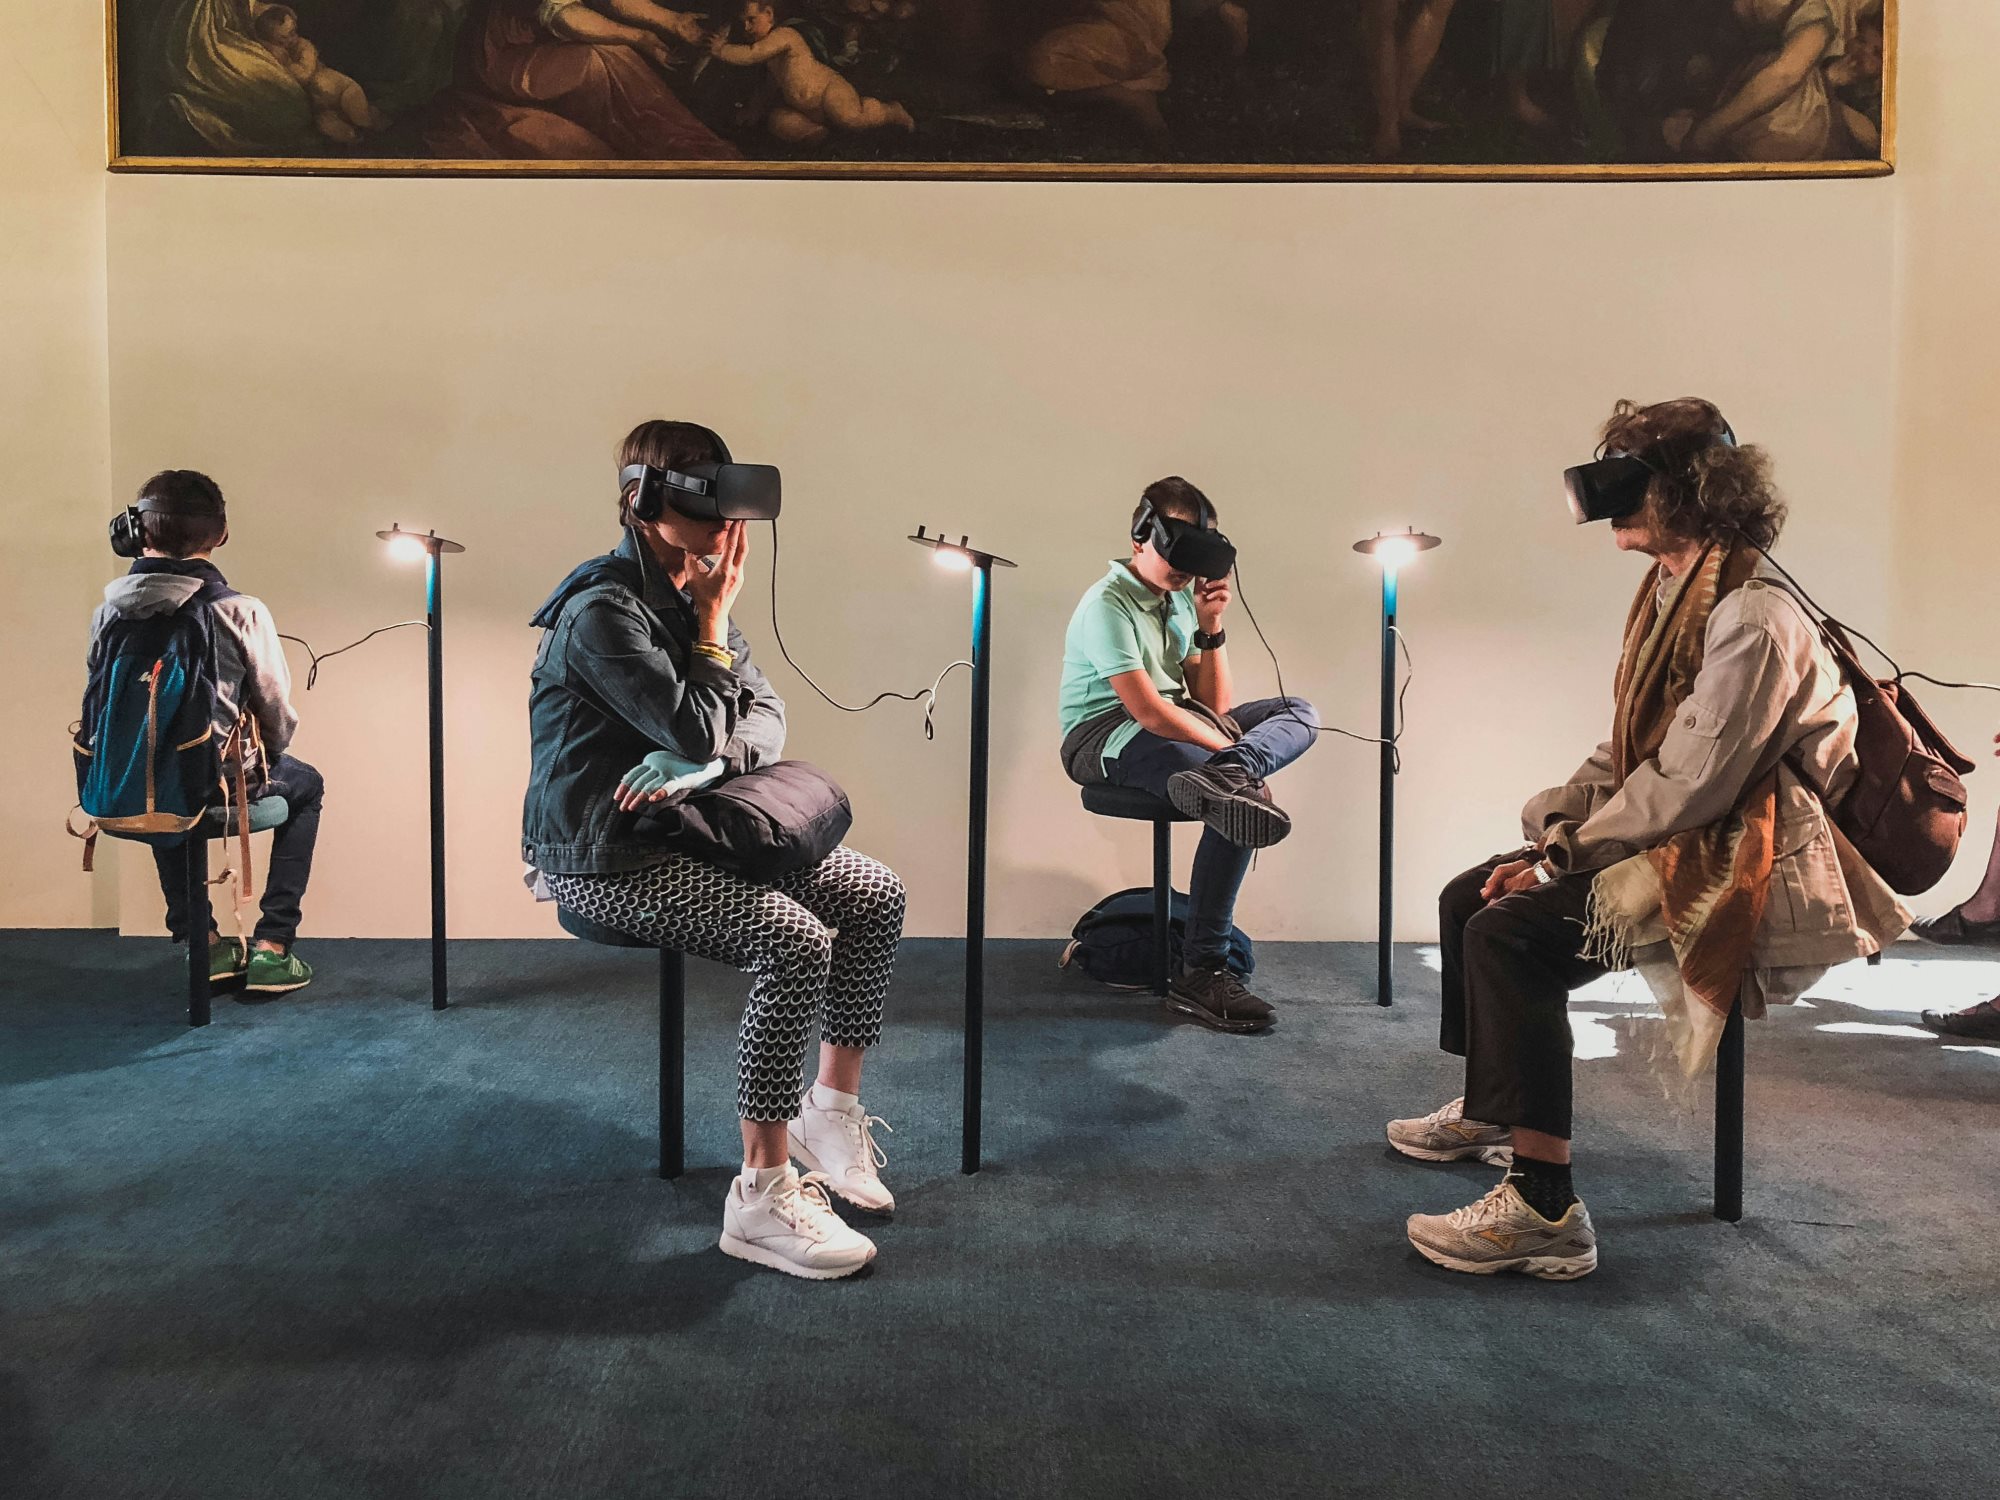 Virtuelna realnost